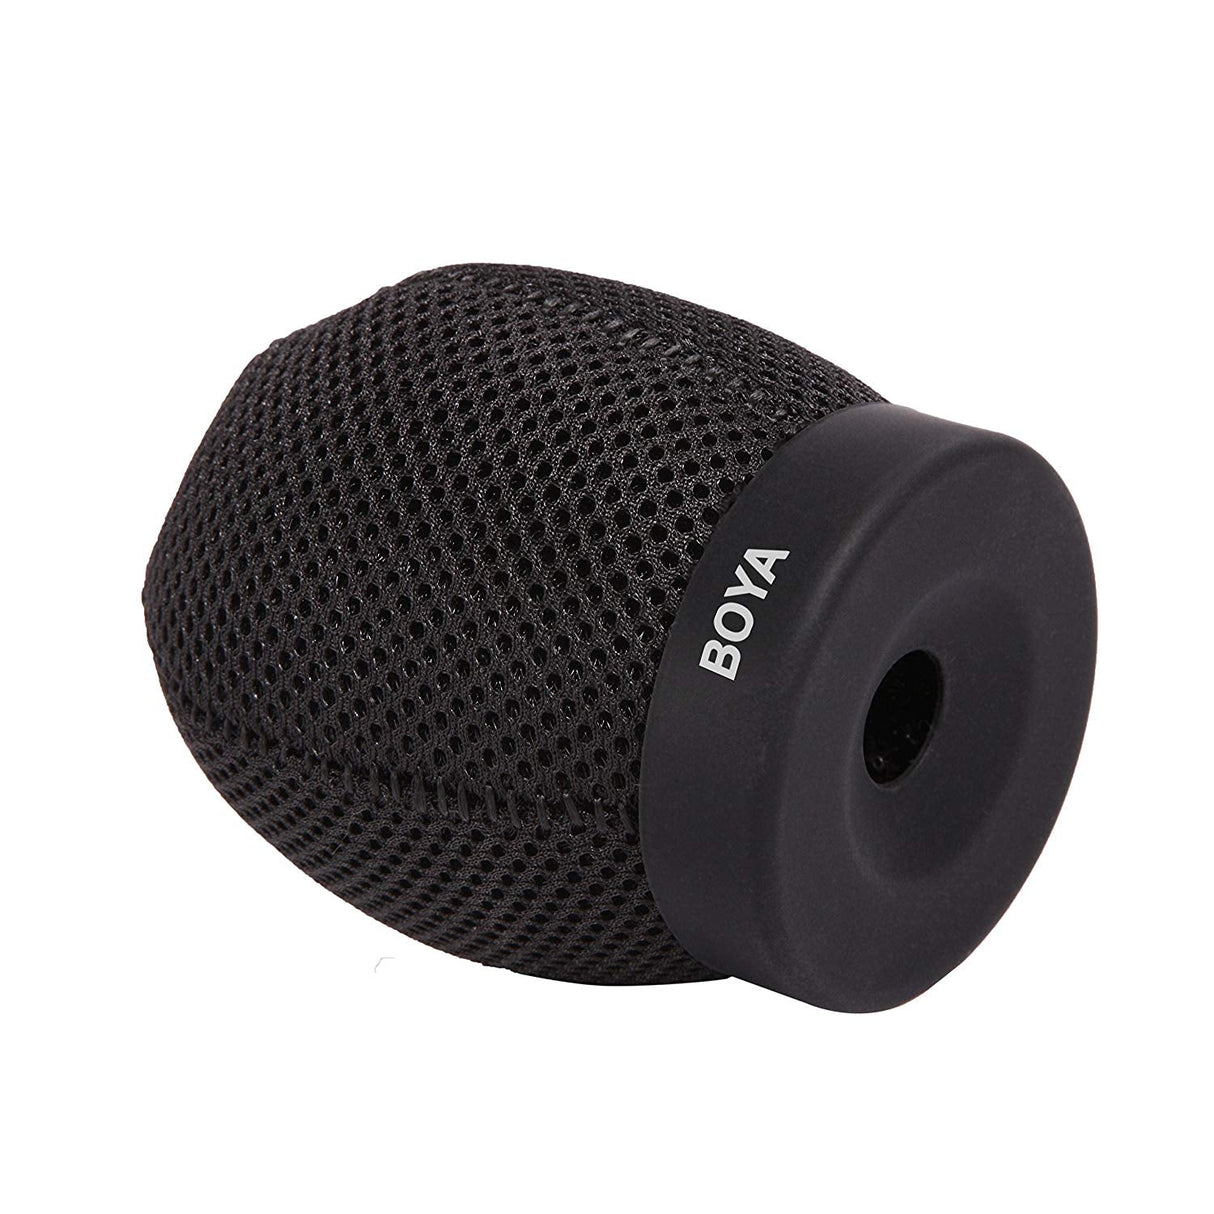 BOYA BY-T50 Inside Depth 50mm Professional Windshield for Shotgun Microphones